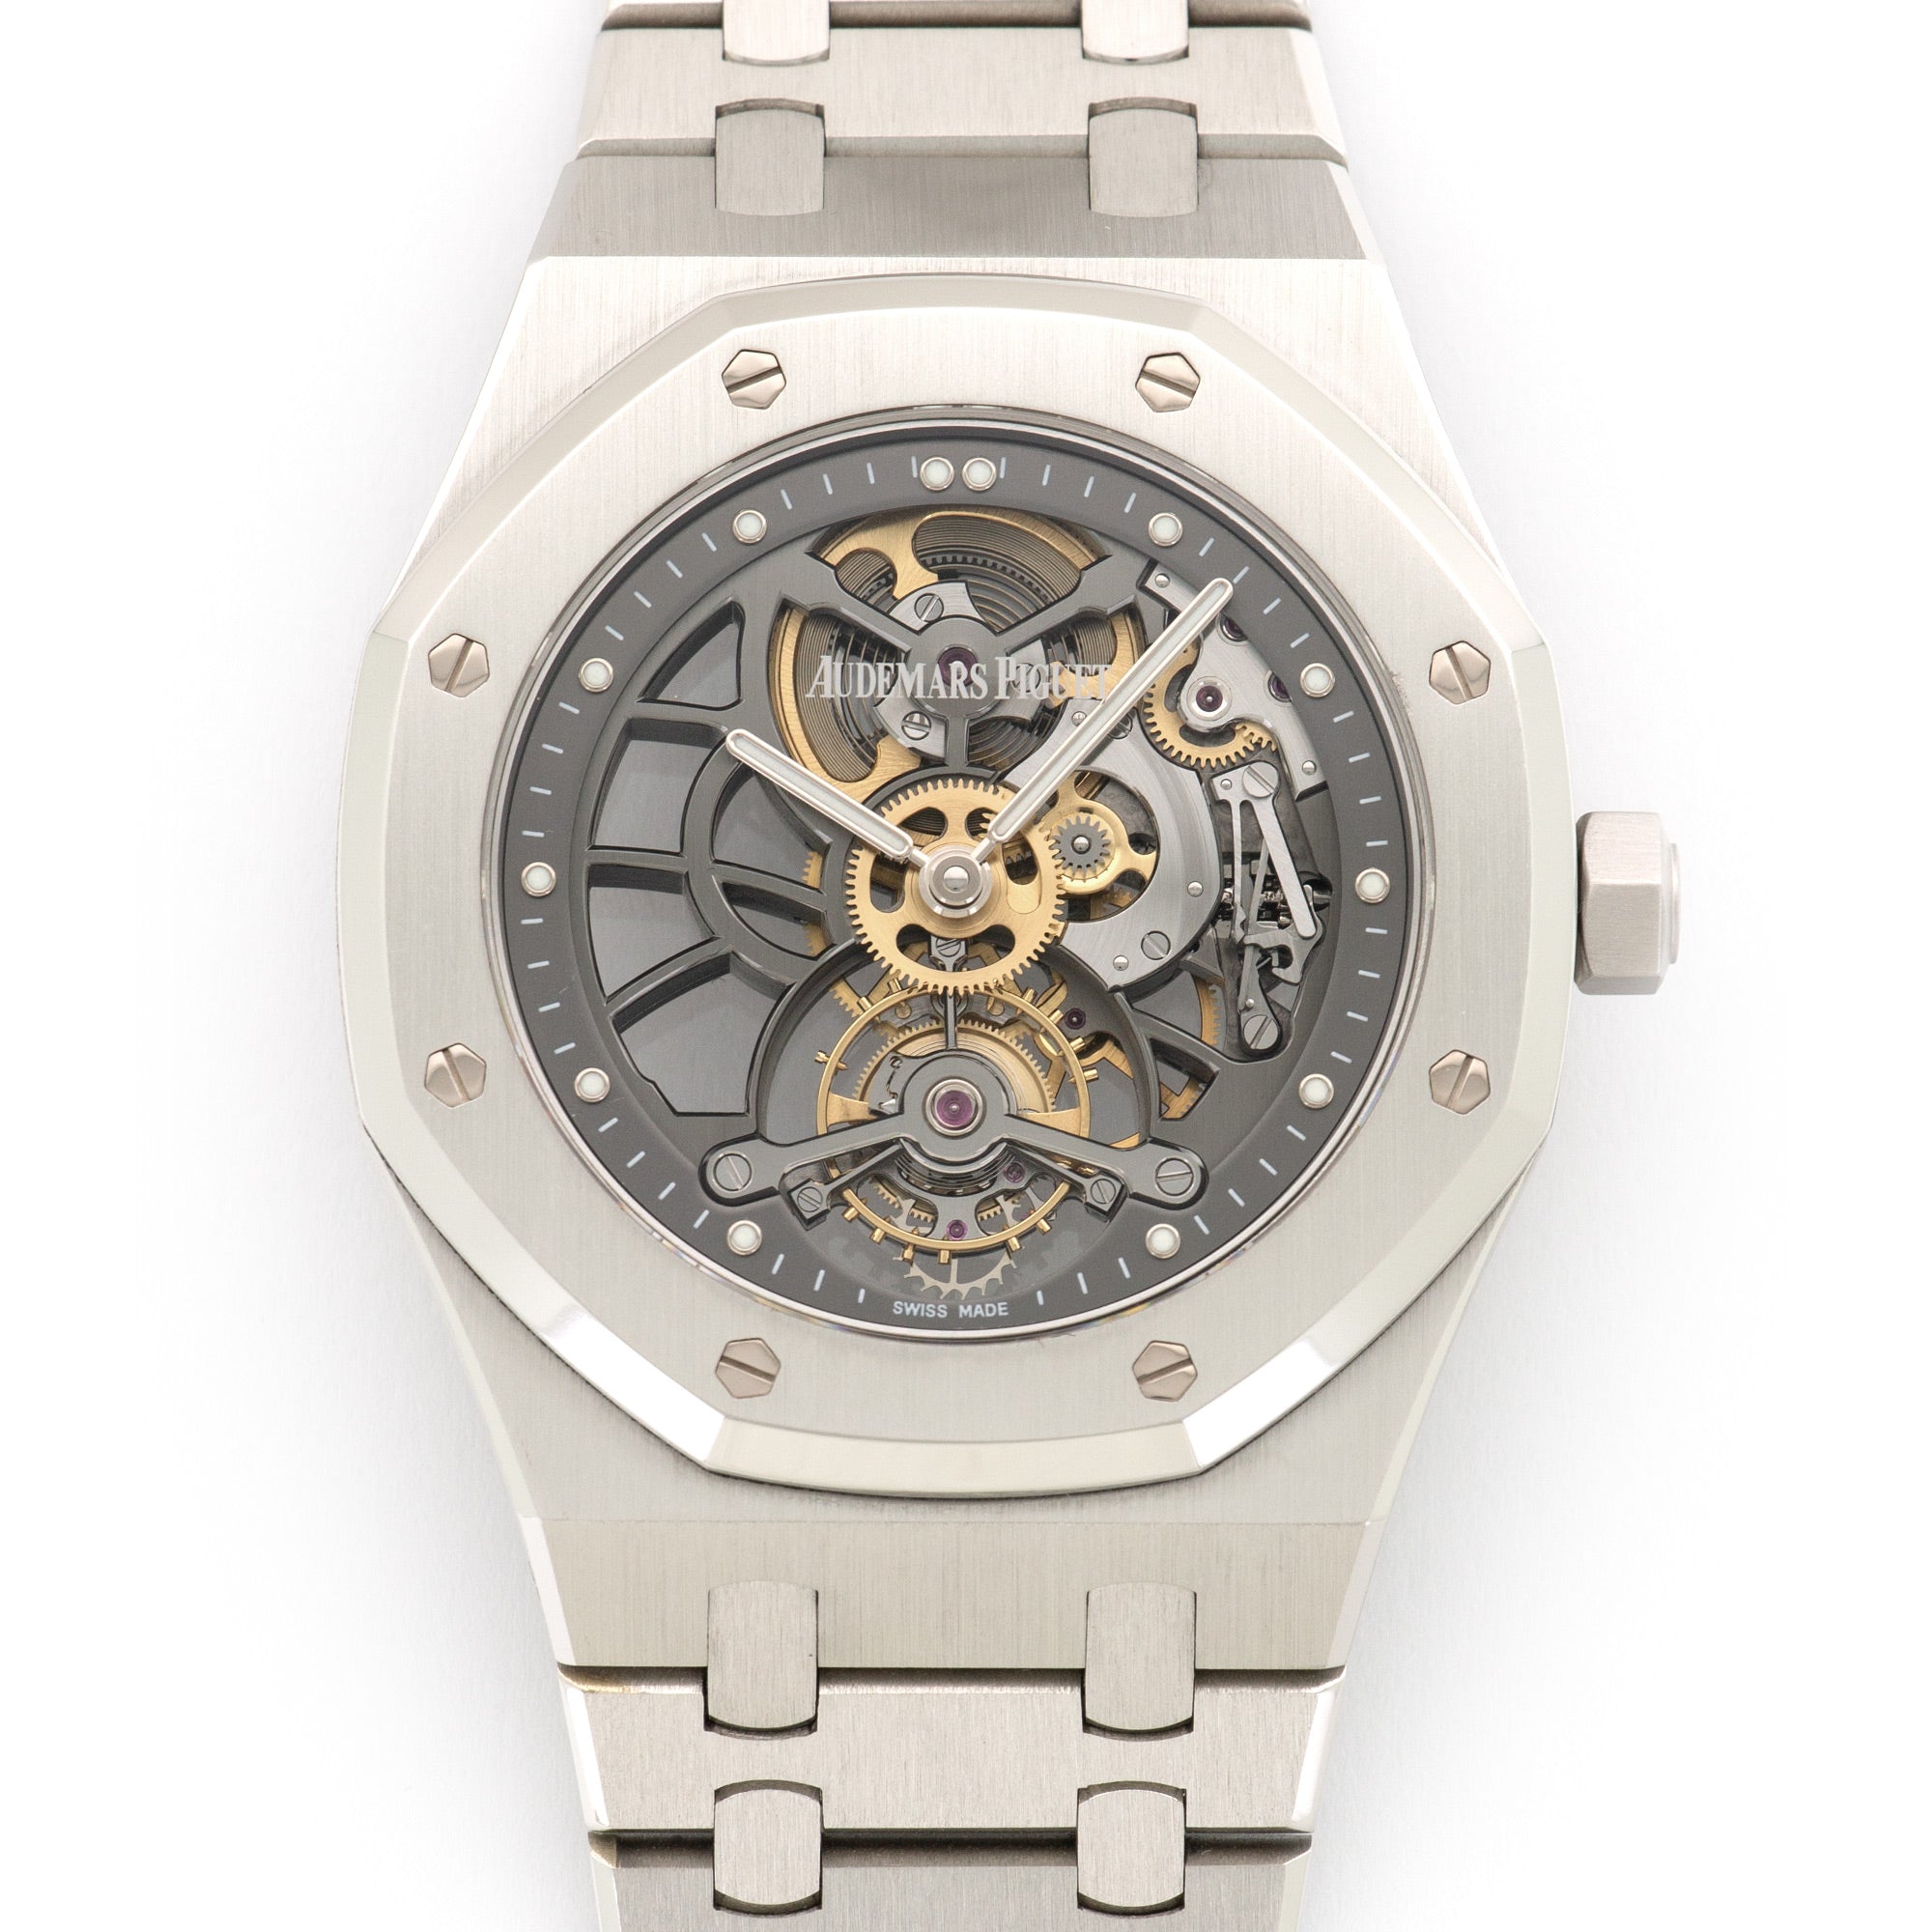 Audemars Piguet - Audemars Piguet Royal Oak Platinum Skeletonized Tourbillon Watch Ref. 26511 - The Keystone Watches